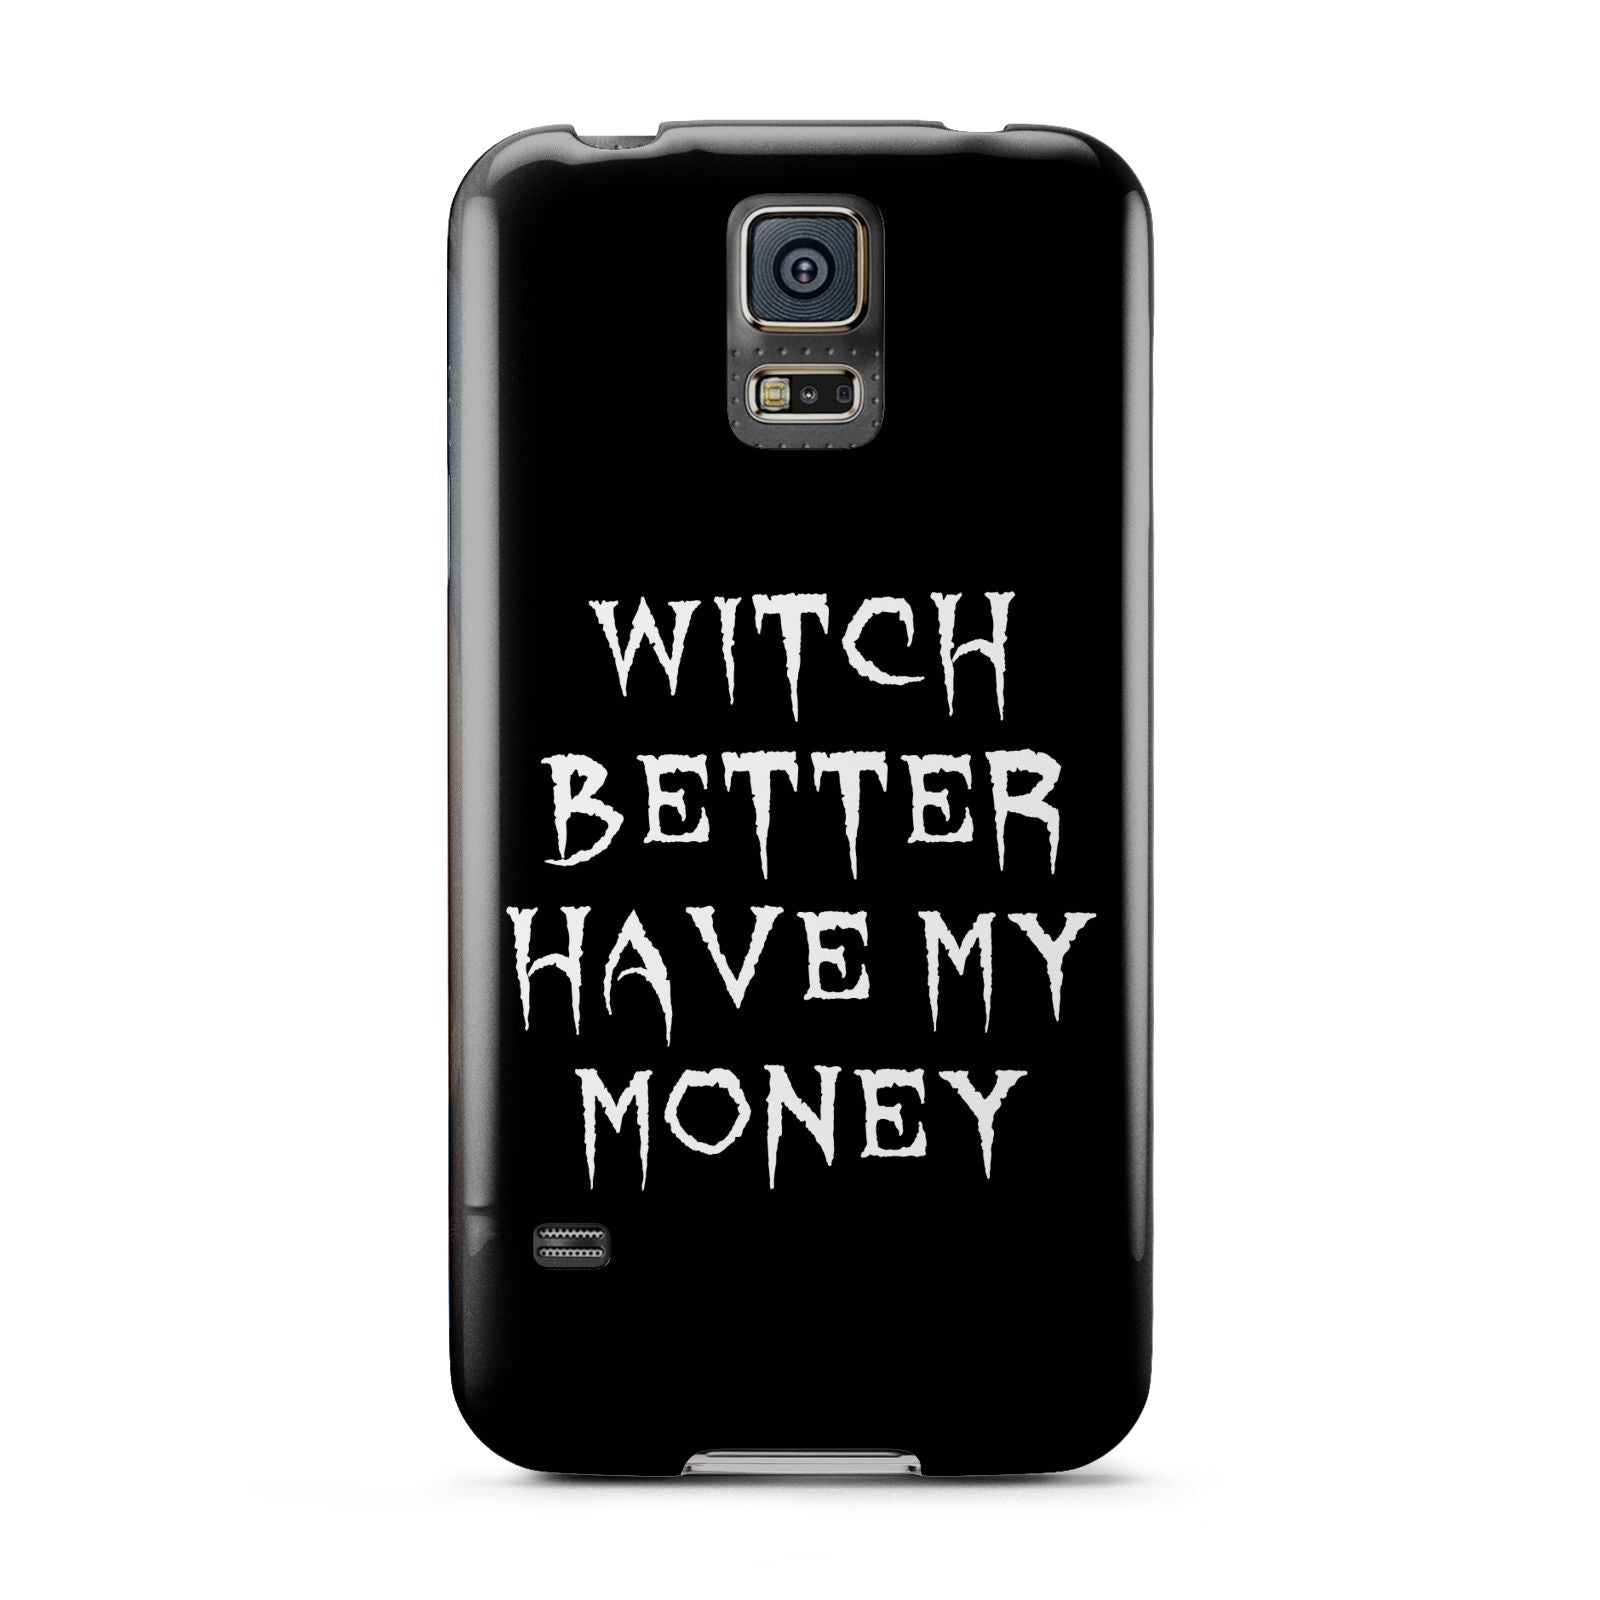 Witch Better Have My Money Samsung Galaxy S5 Case